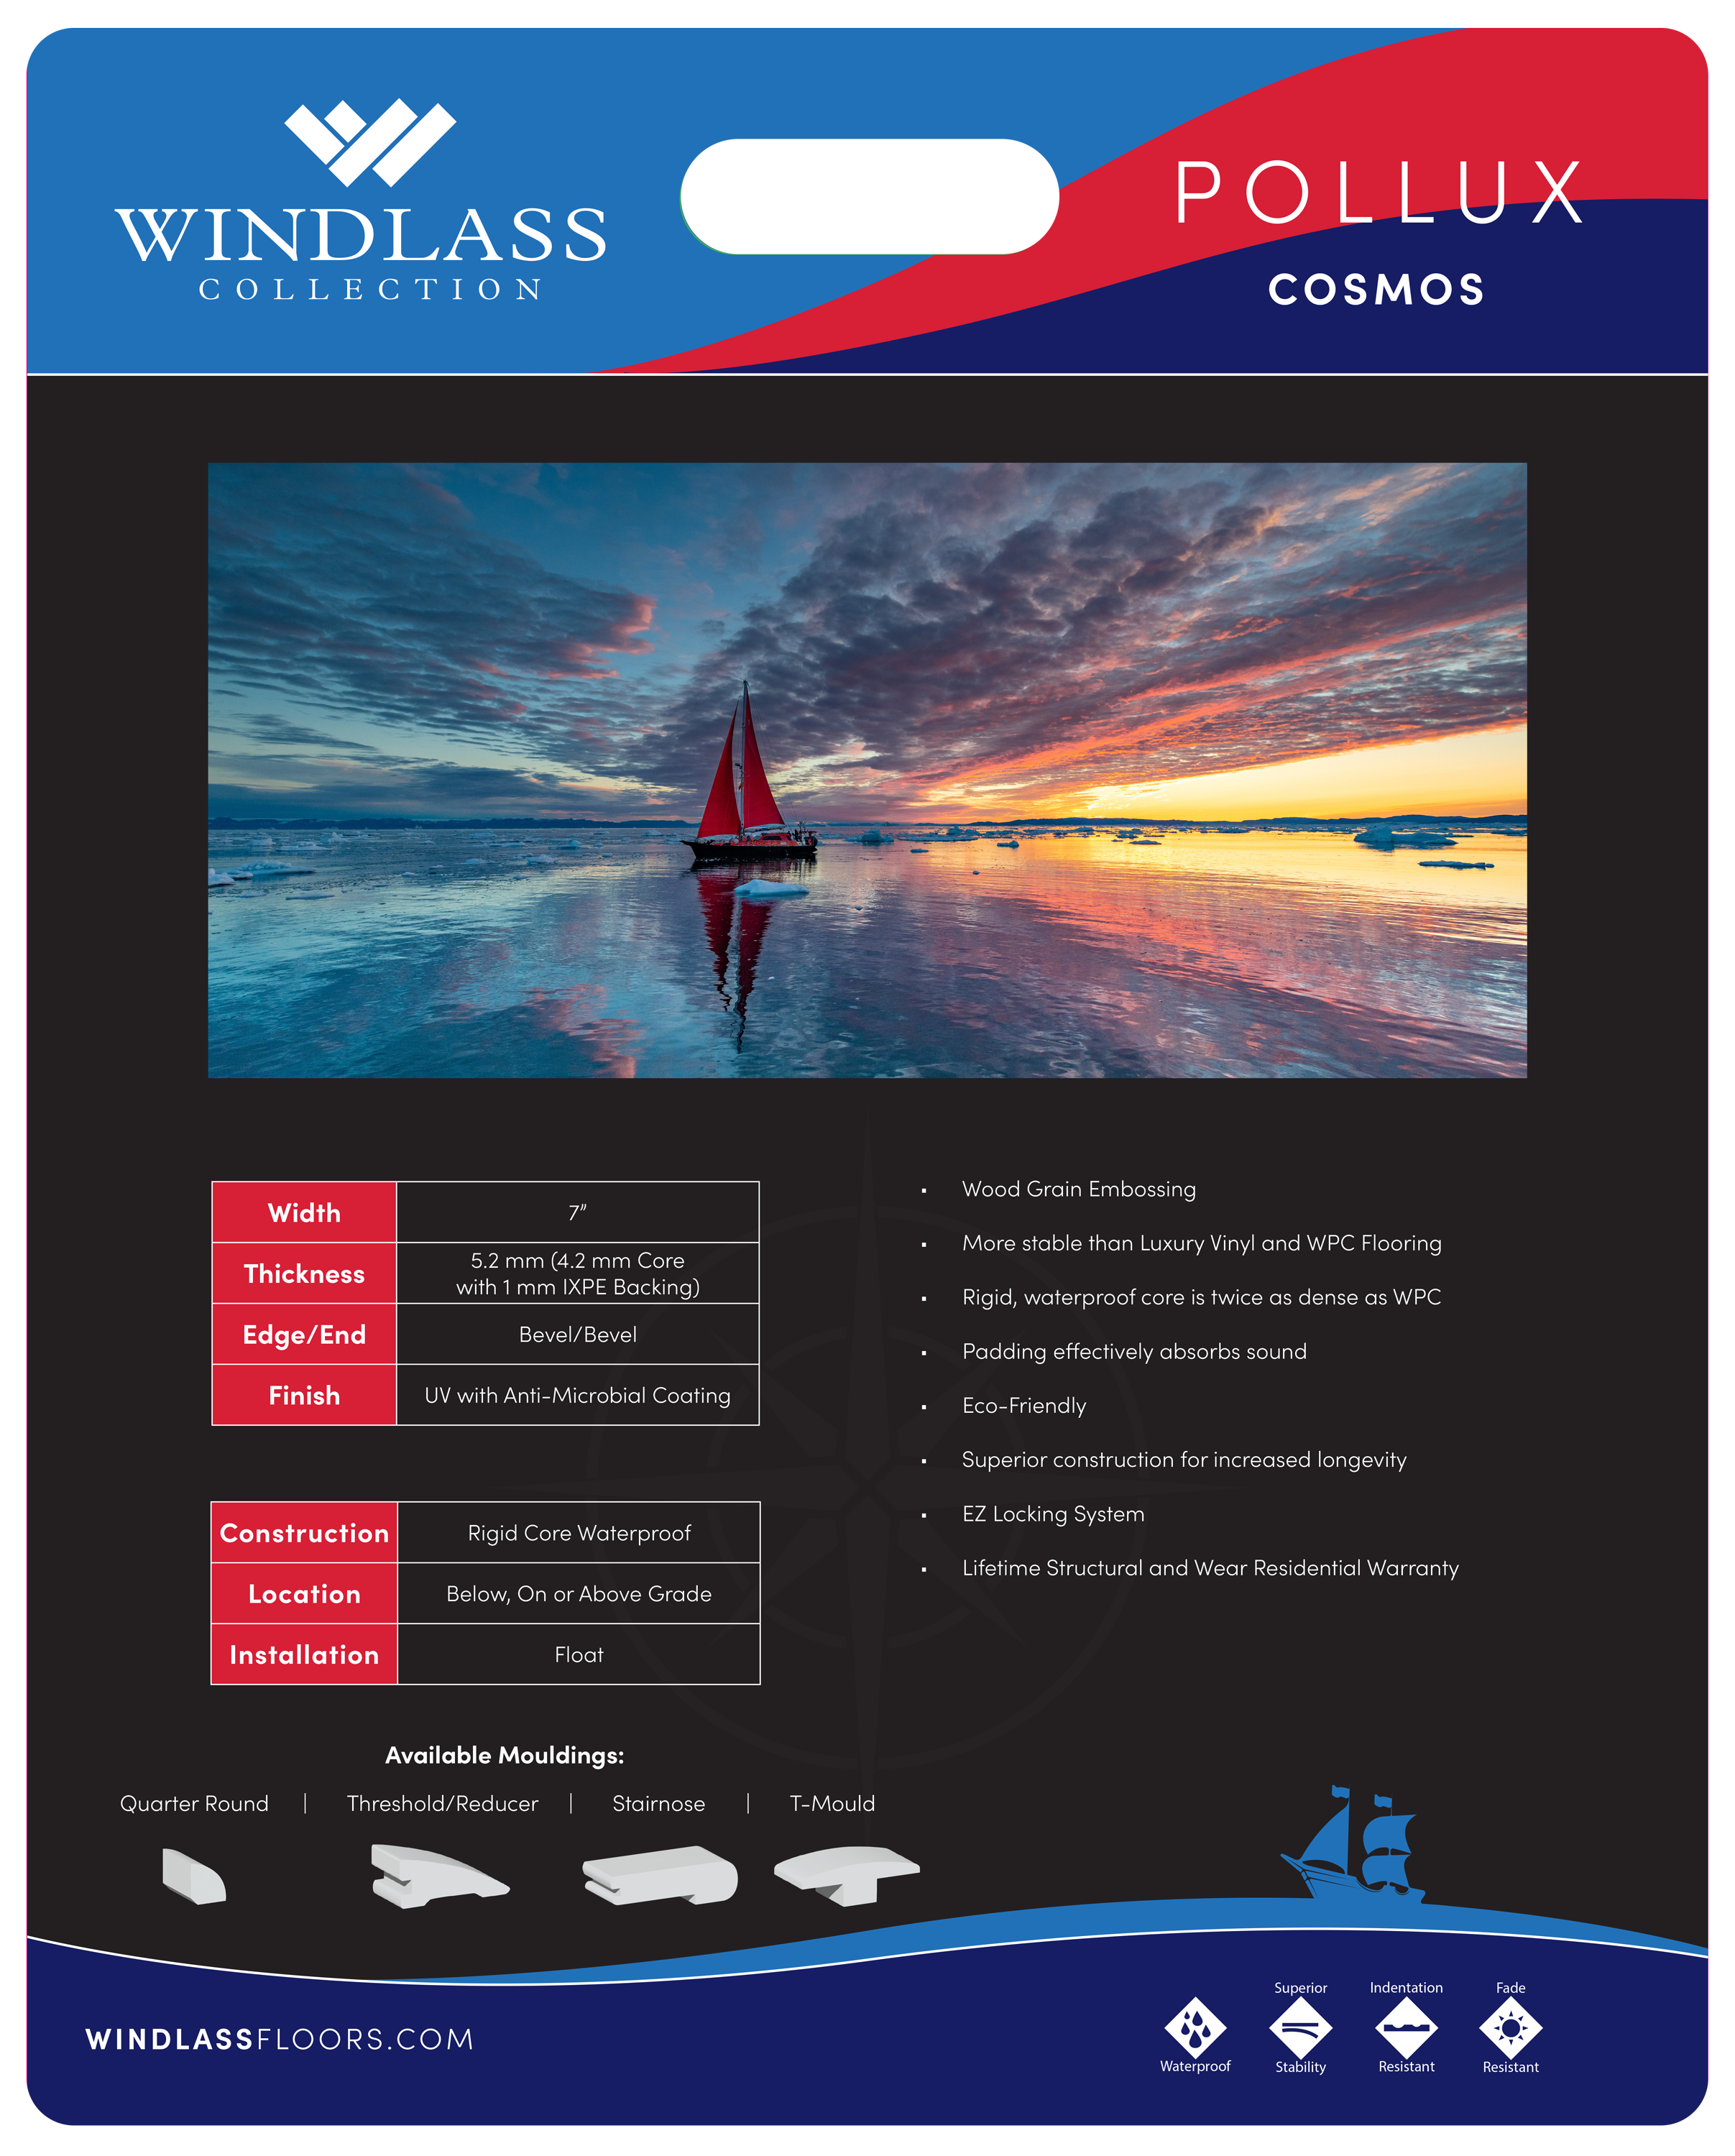 Windlass-Displayboard-POLLUX.png